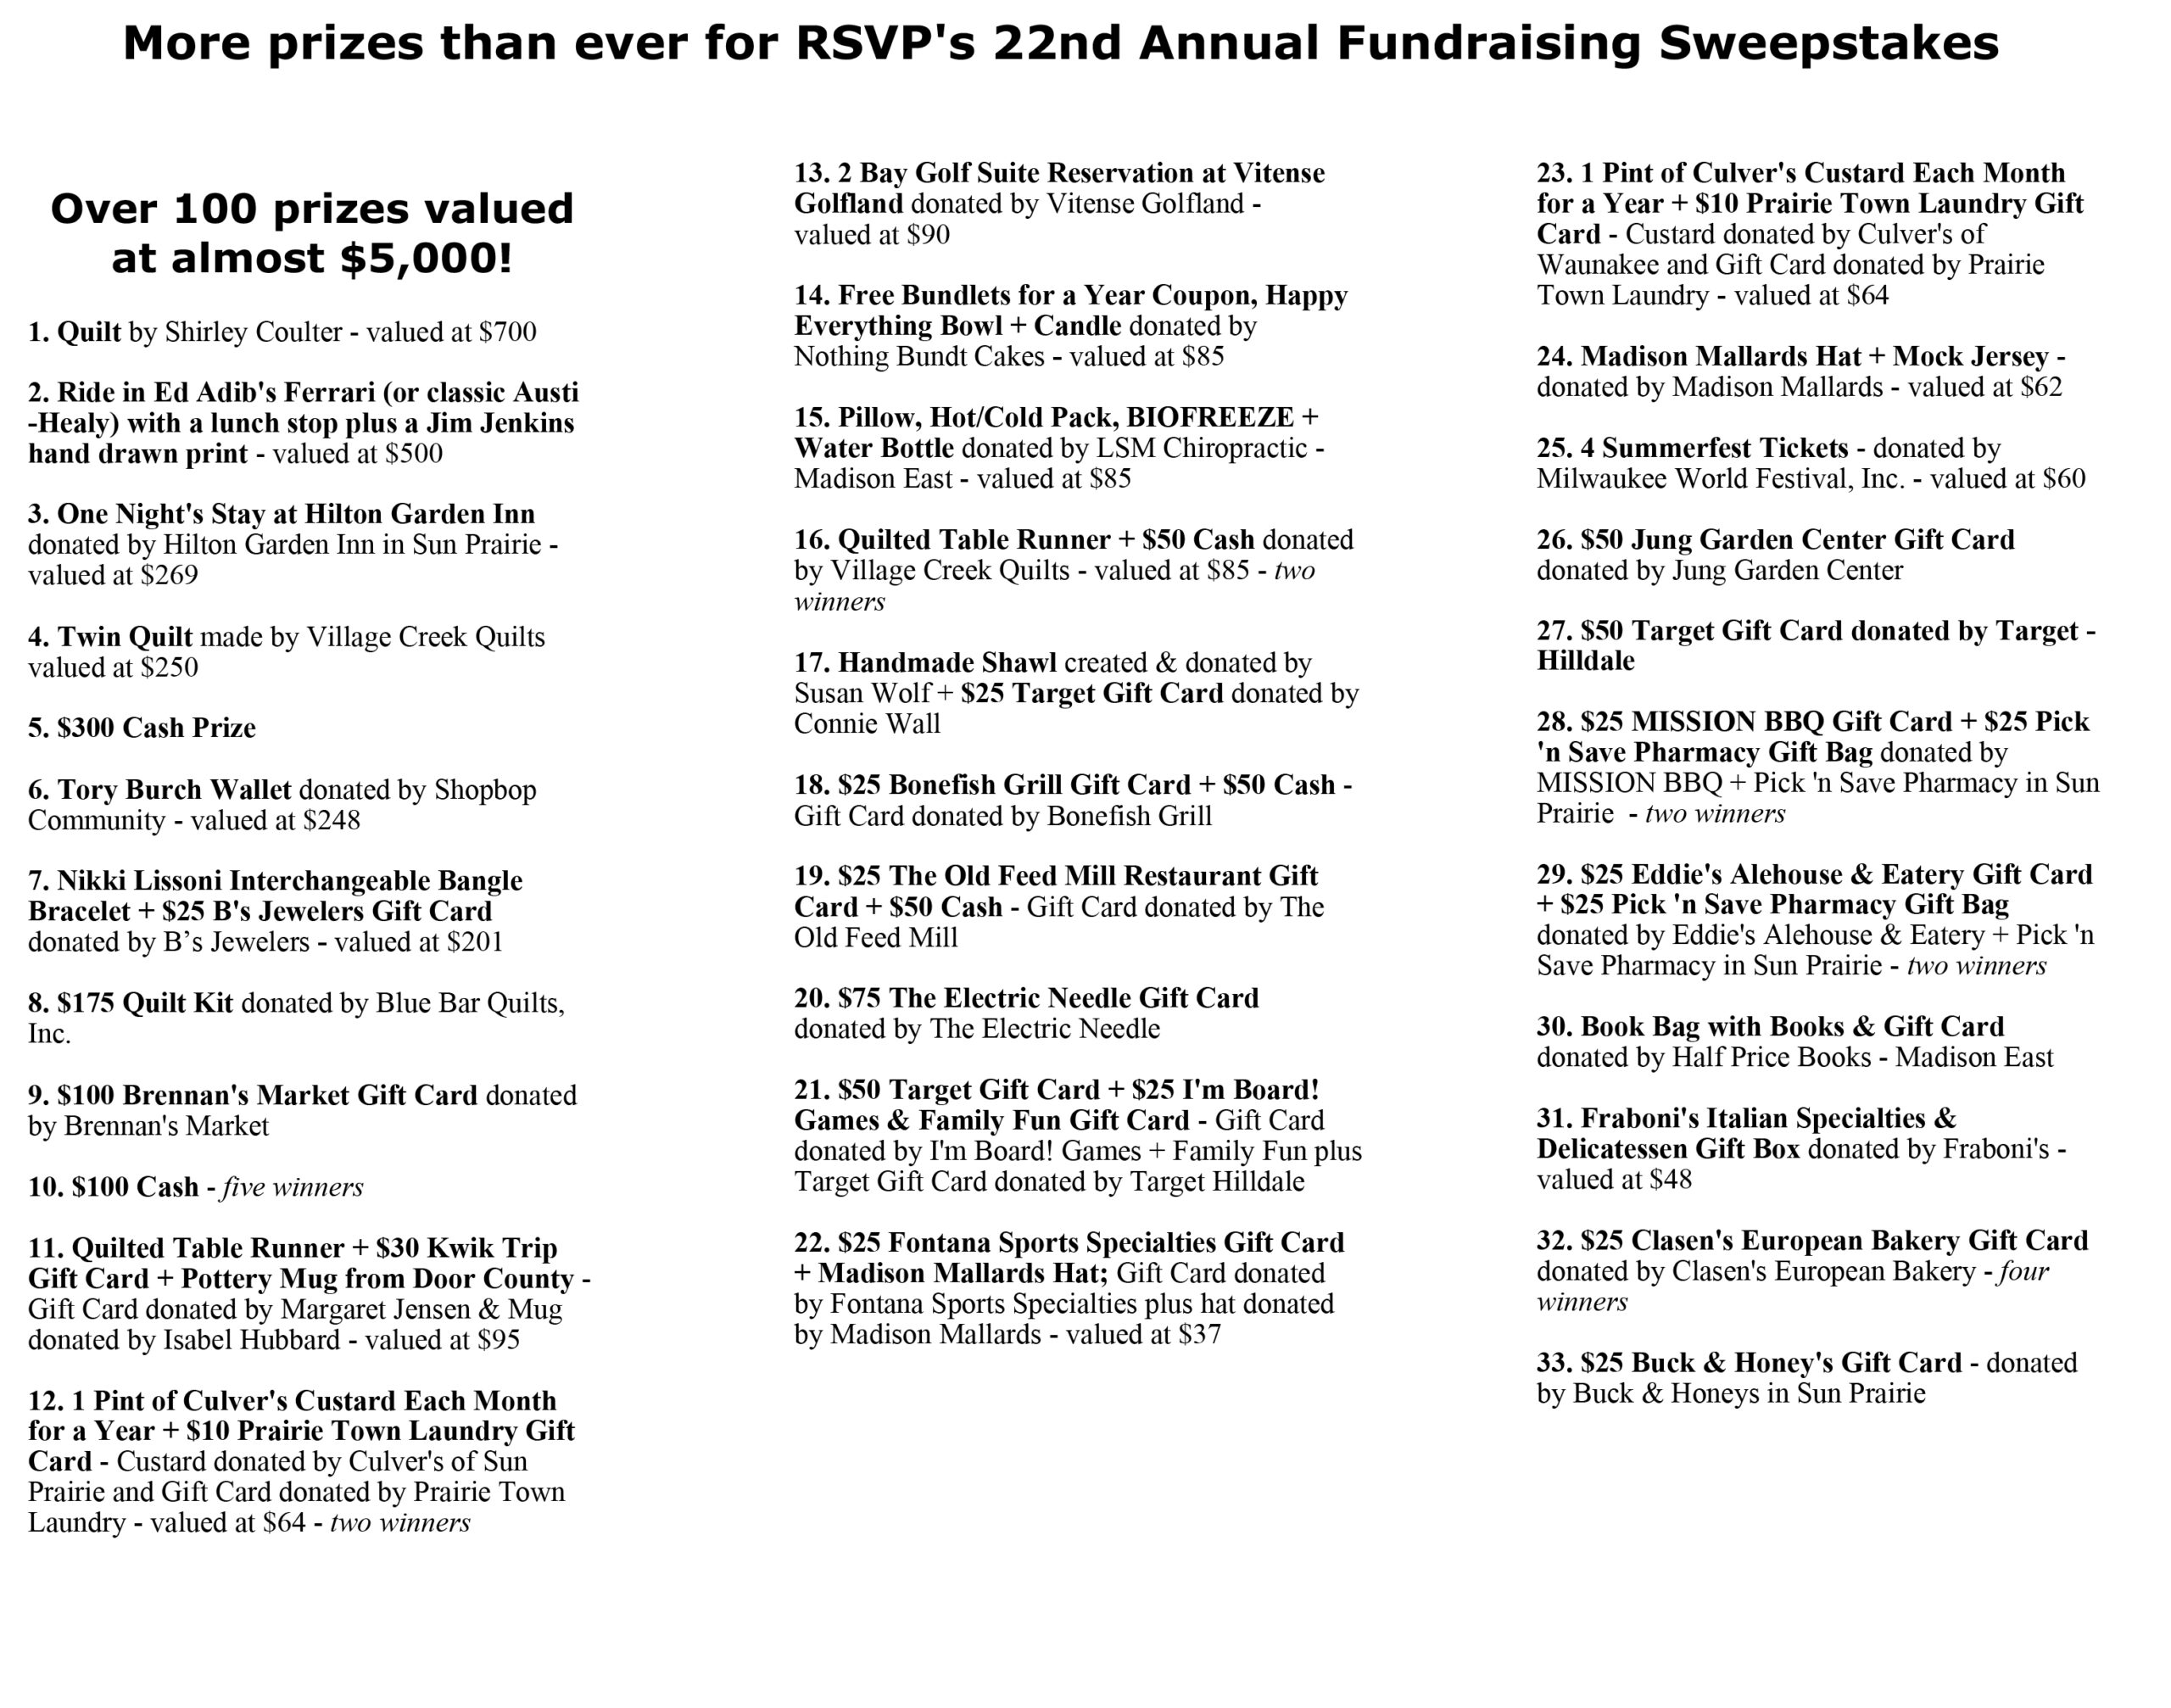 Lista de premios del 22º sorteo anual de RSVP para recaudar fondos  